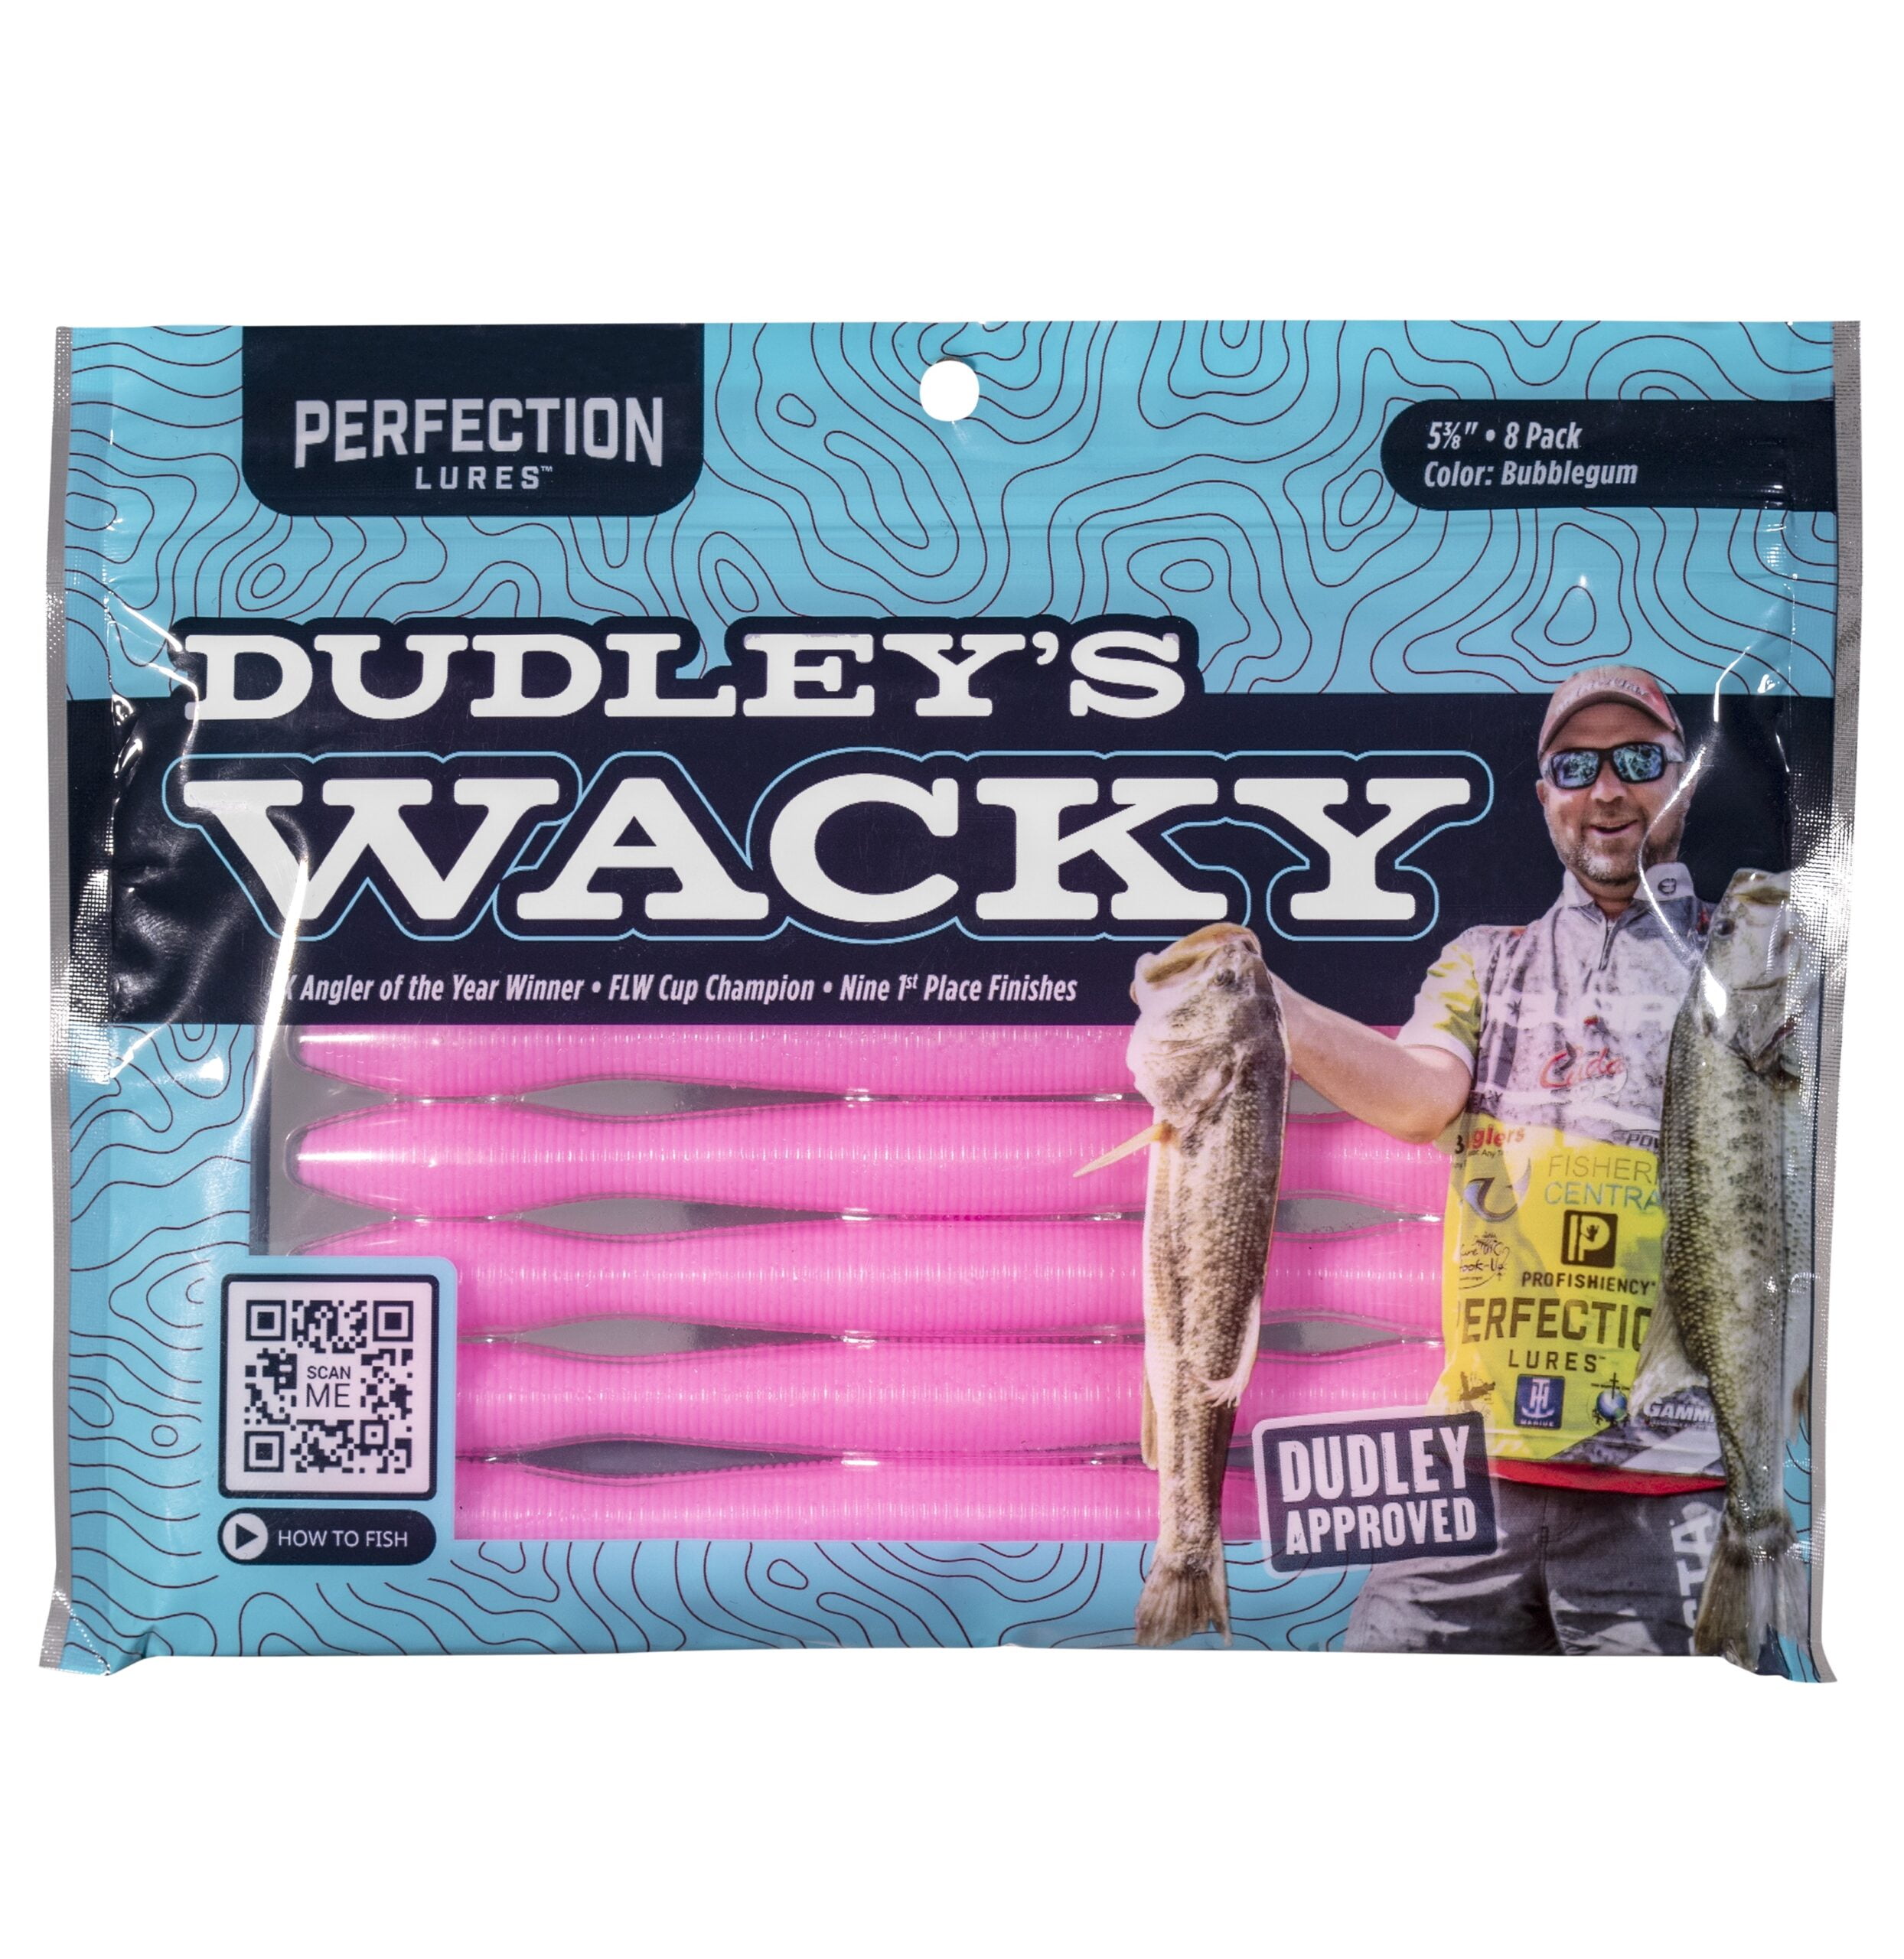 Perfection Lures Dudley's Wacky Worm Houdini Soft Plastic Wacky